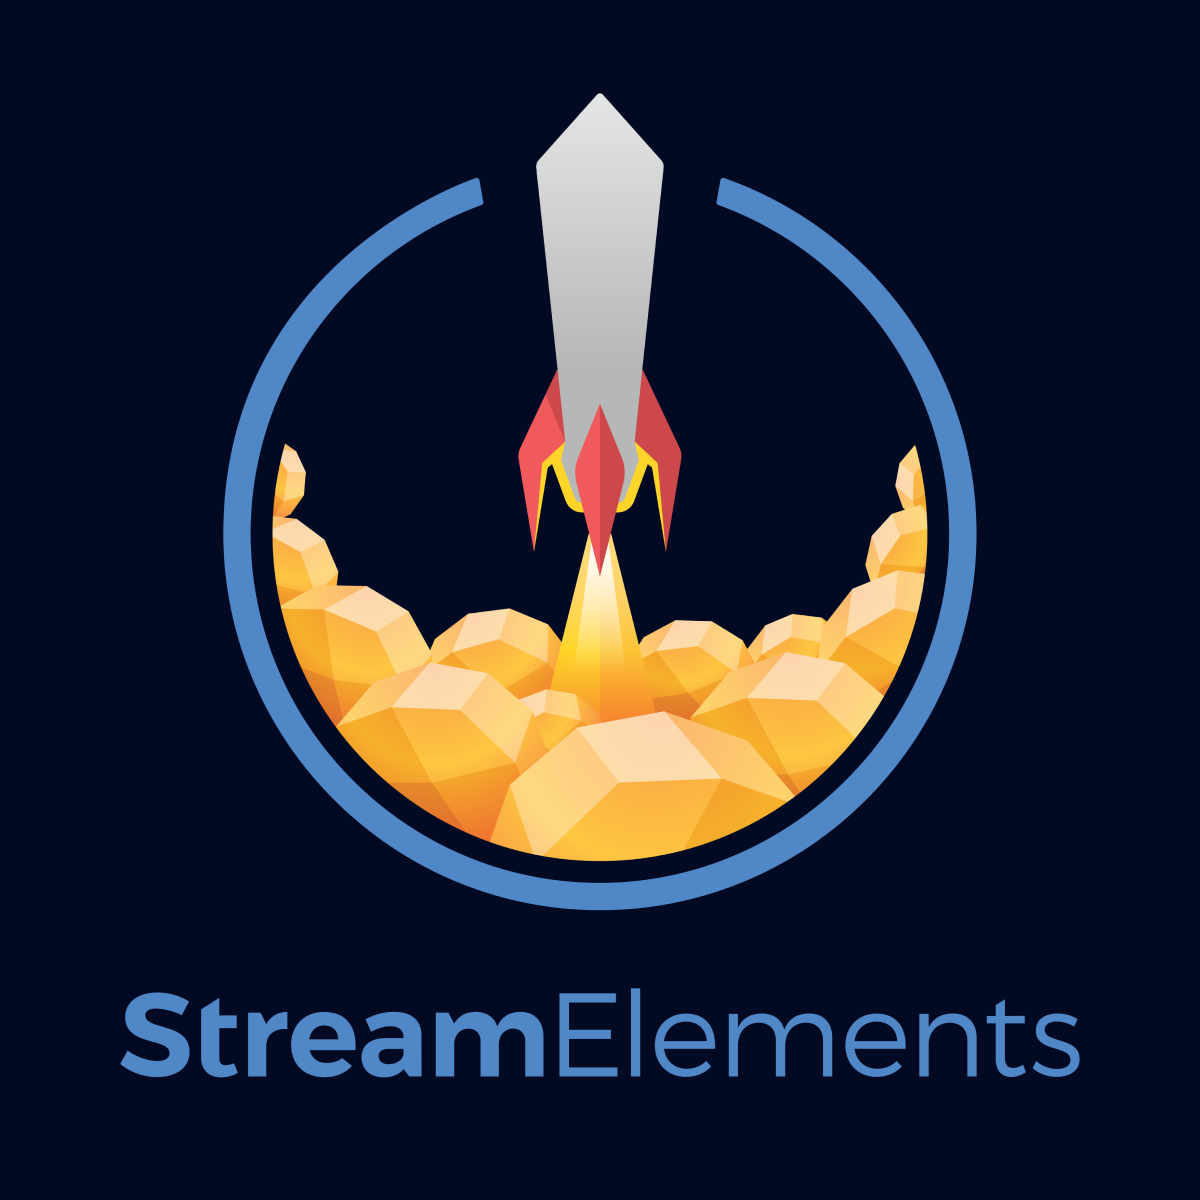 Стрим элемент. Стрим Элементс. Элементы для стрима. STREAMELEMENTS logo. Steam elements.